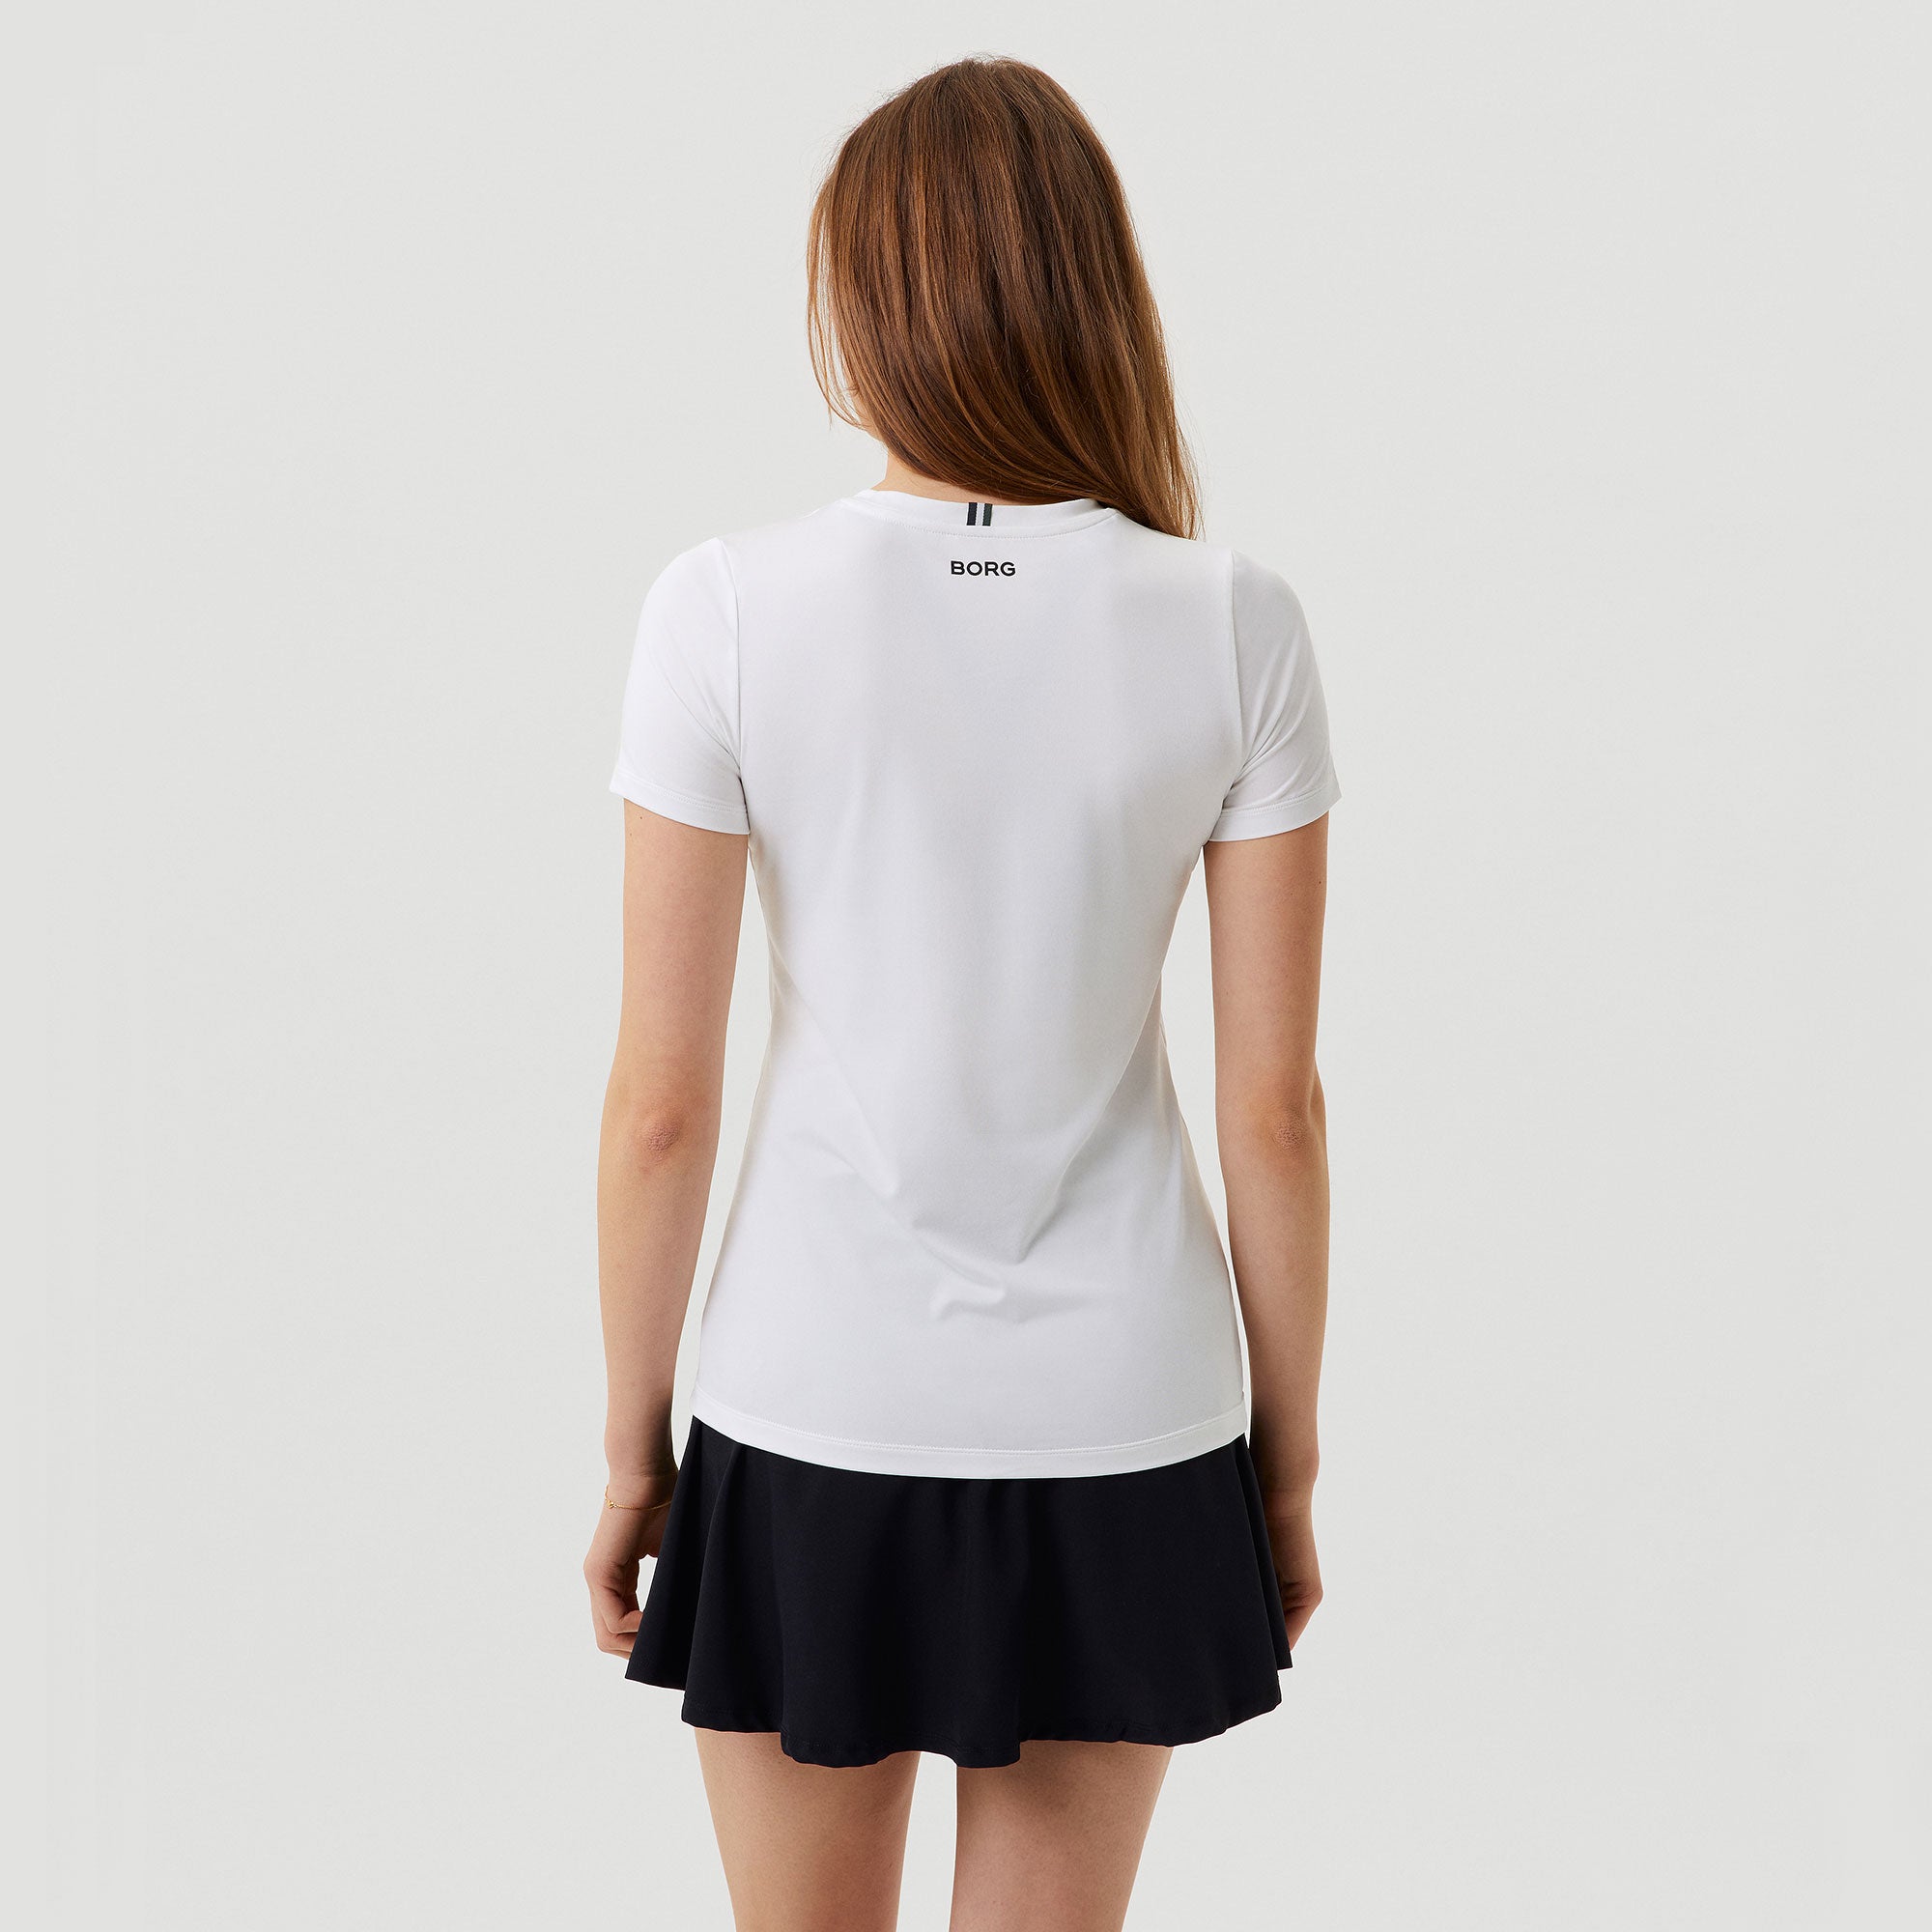 Björn Borg Ace Women's Slim Tennis Shirt - White (2)